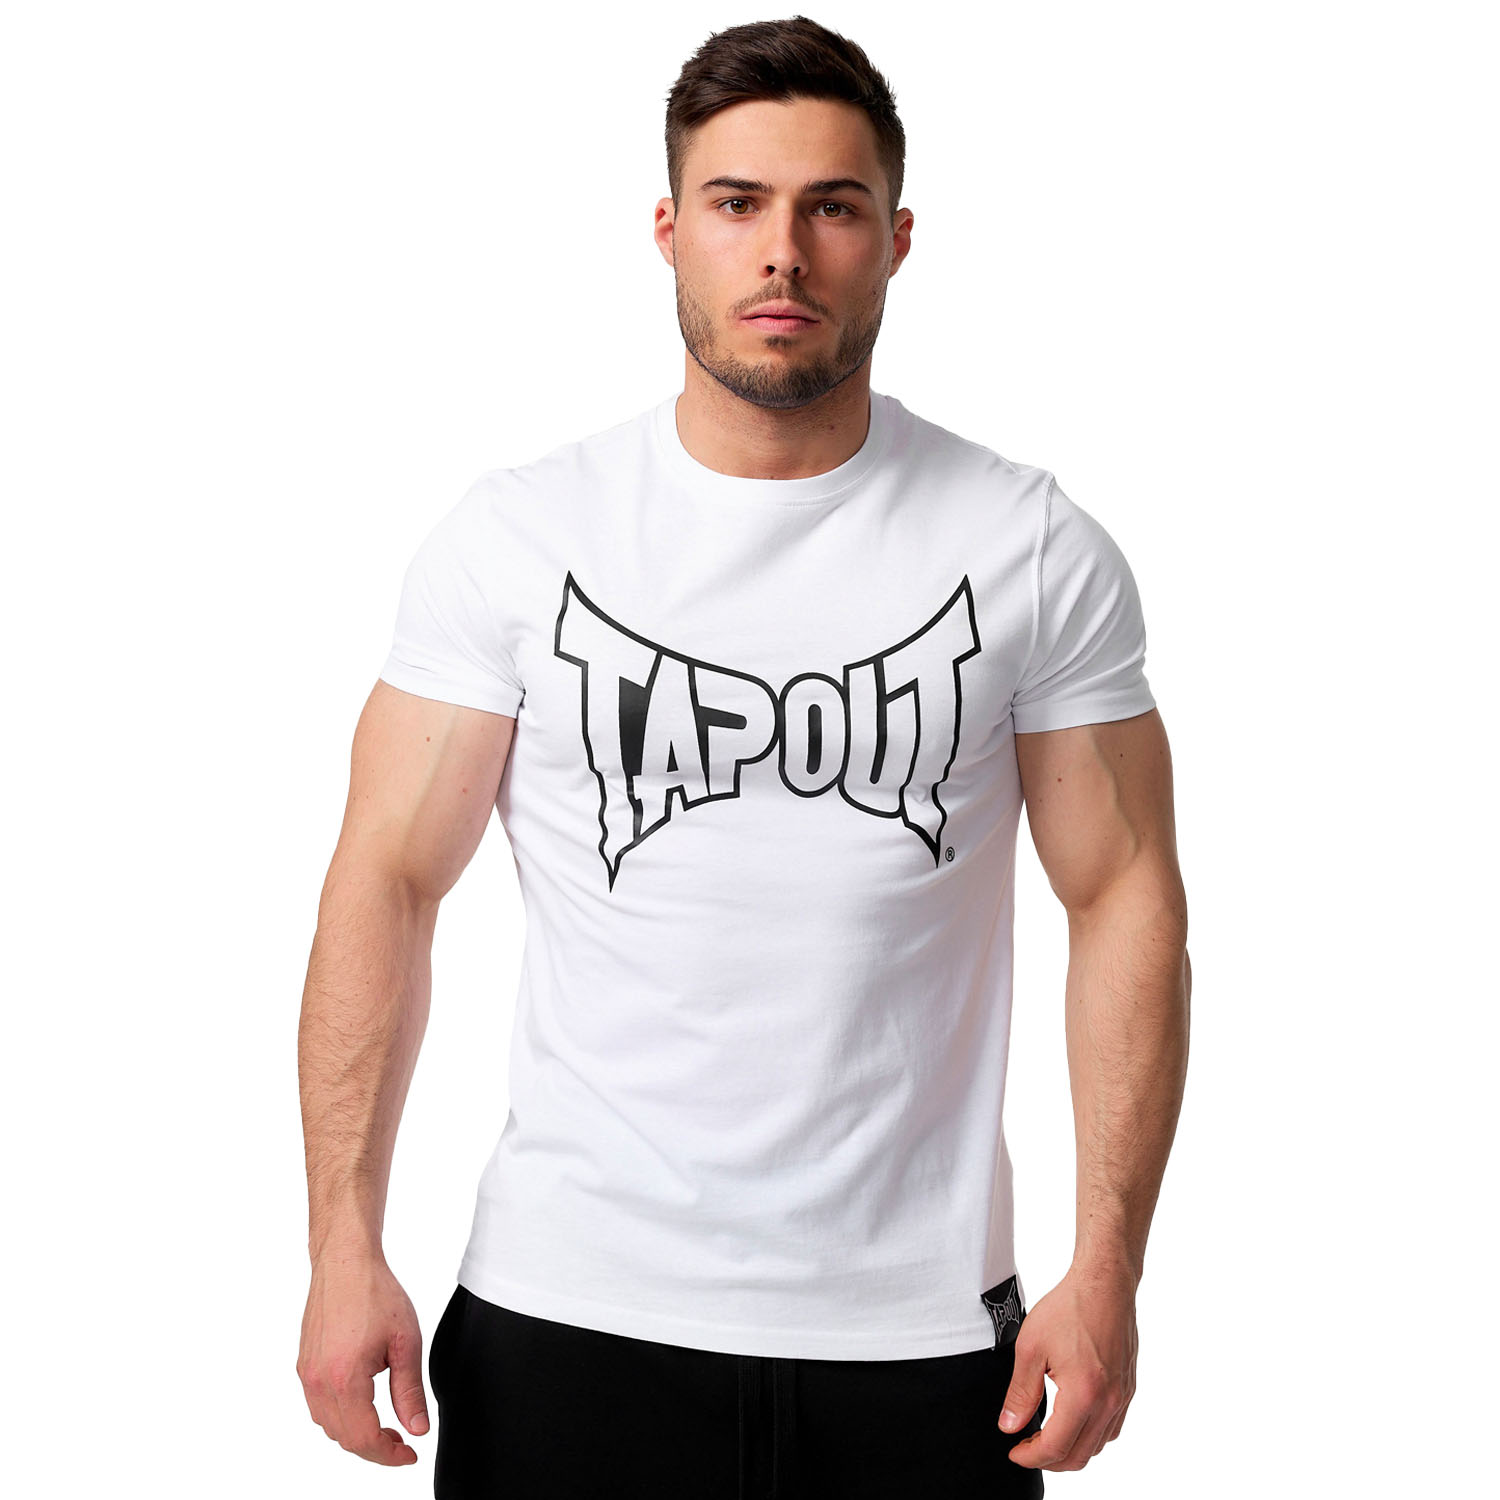 Tapout T-Shirt, Lifestyle Basic, white-black, XXL